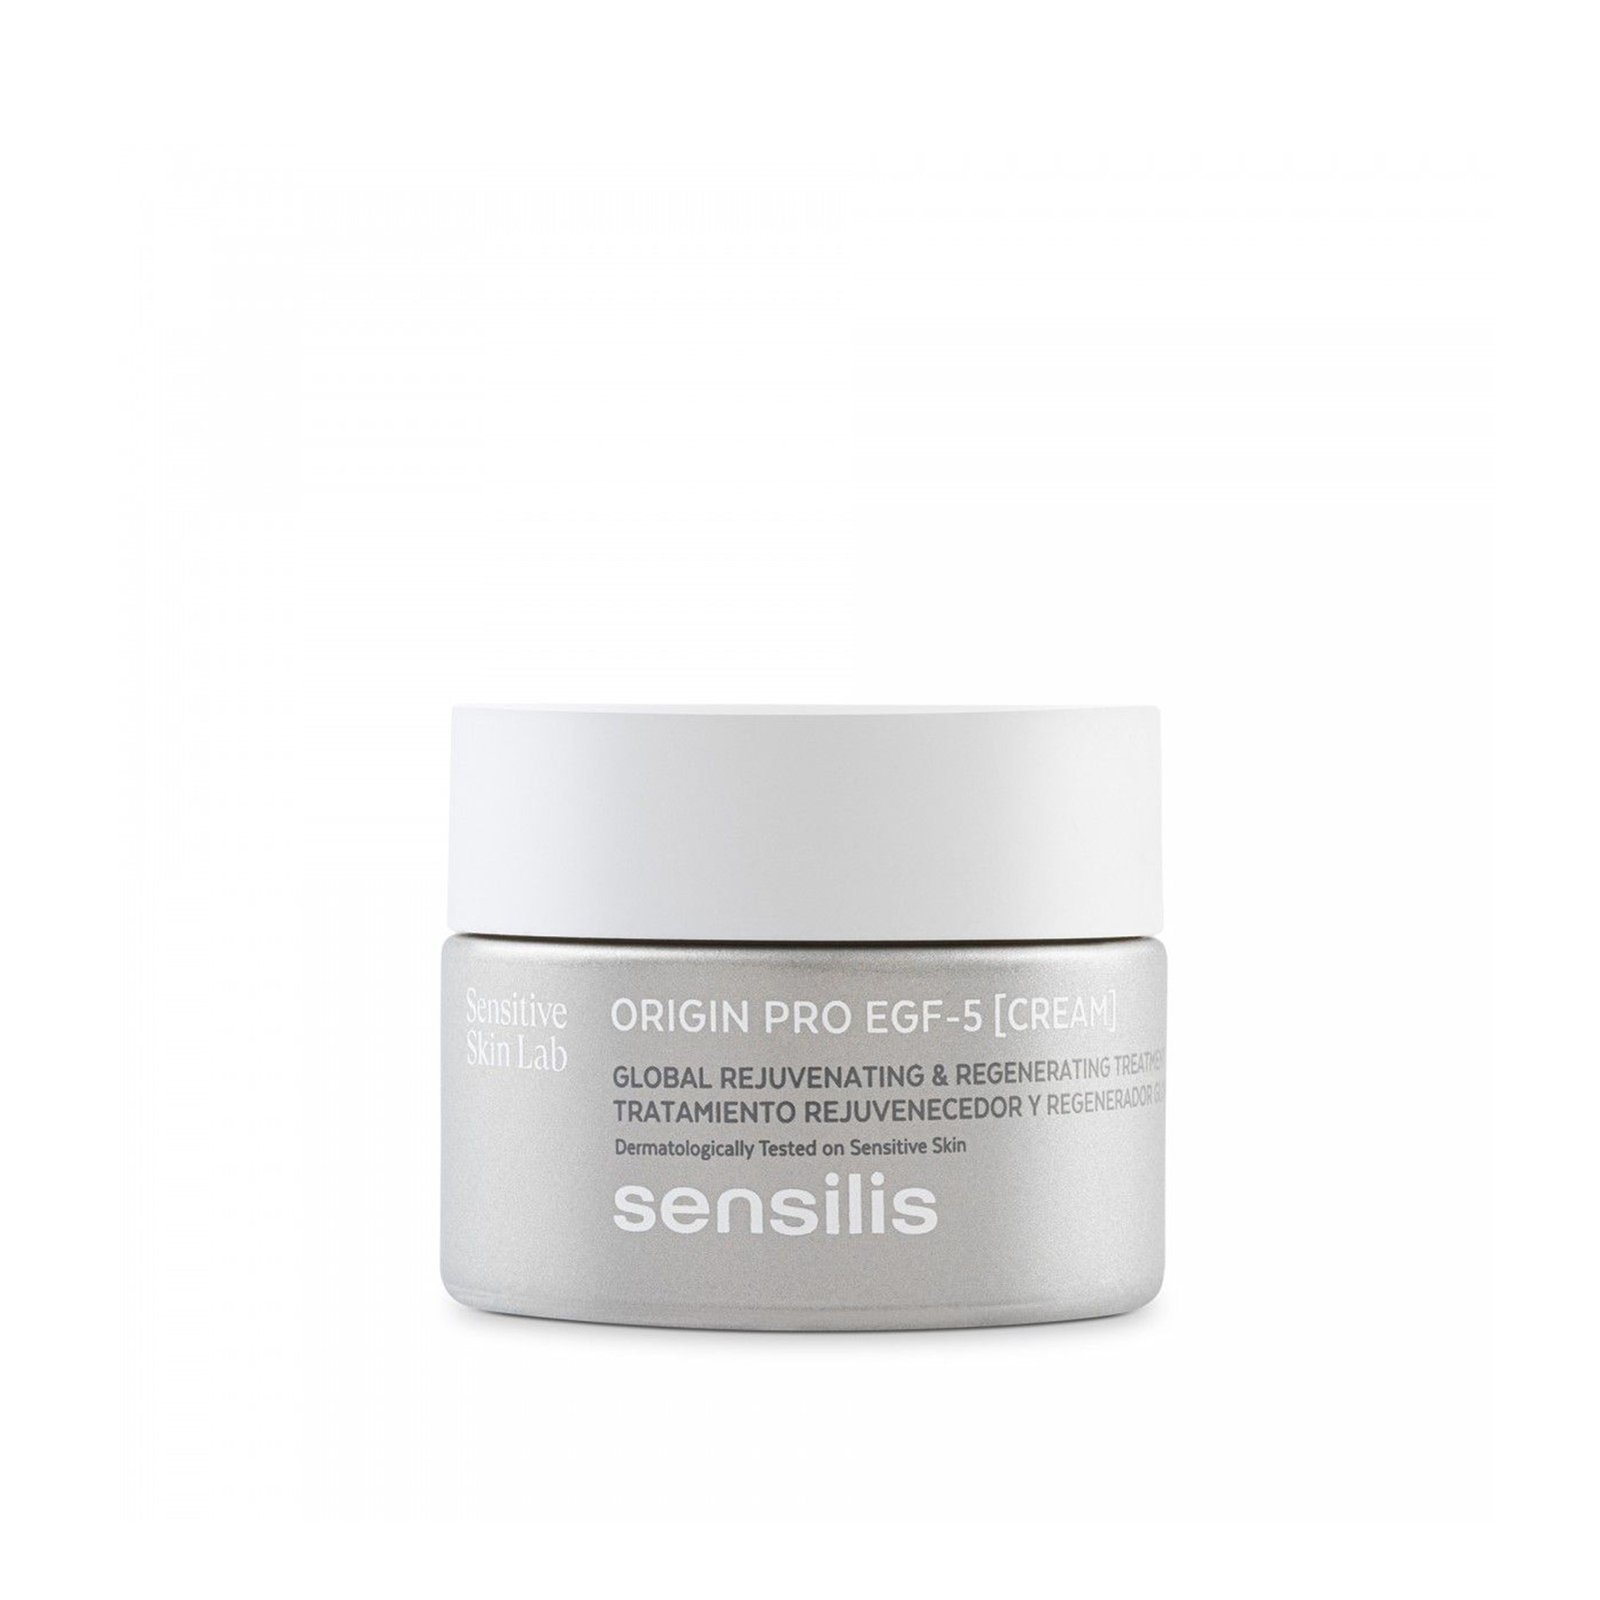 Sensilis Origin Pro EGF-5 [Cream] Global Rejuvenating & Regenerating Treatment 50ml (1.69 fl oz)